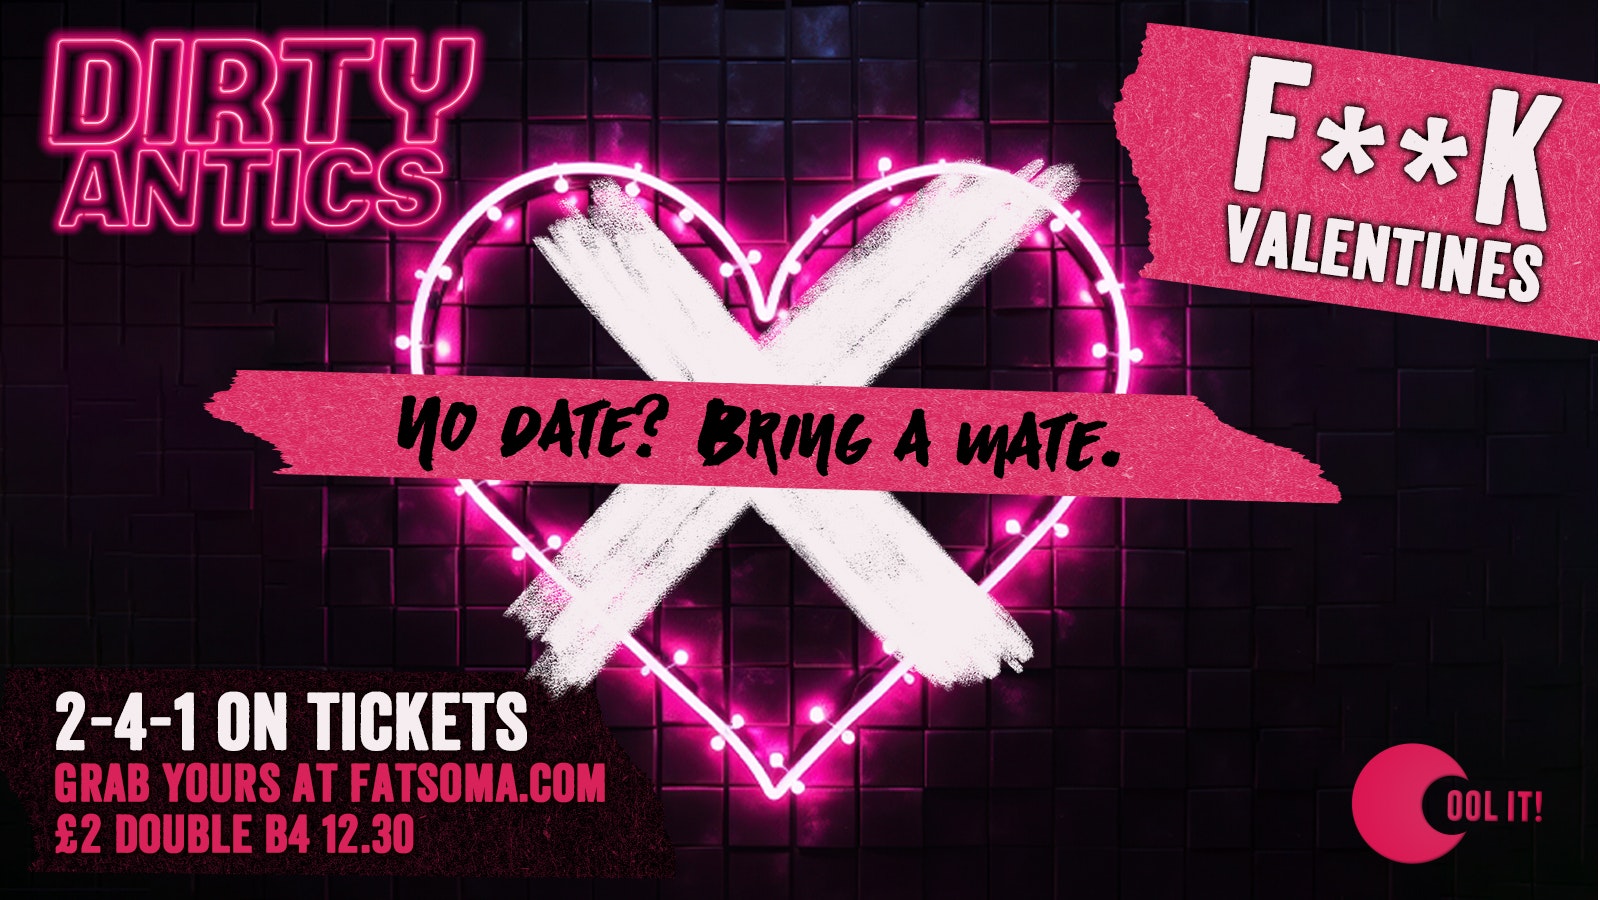 Dirty Antics Thursdays : F**K Valentines Special : 2-4-1 Tickets : £2 DOUBLE VODKA & MIX